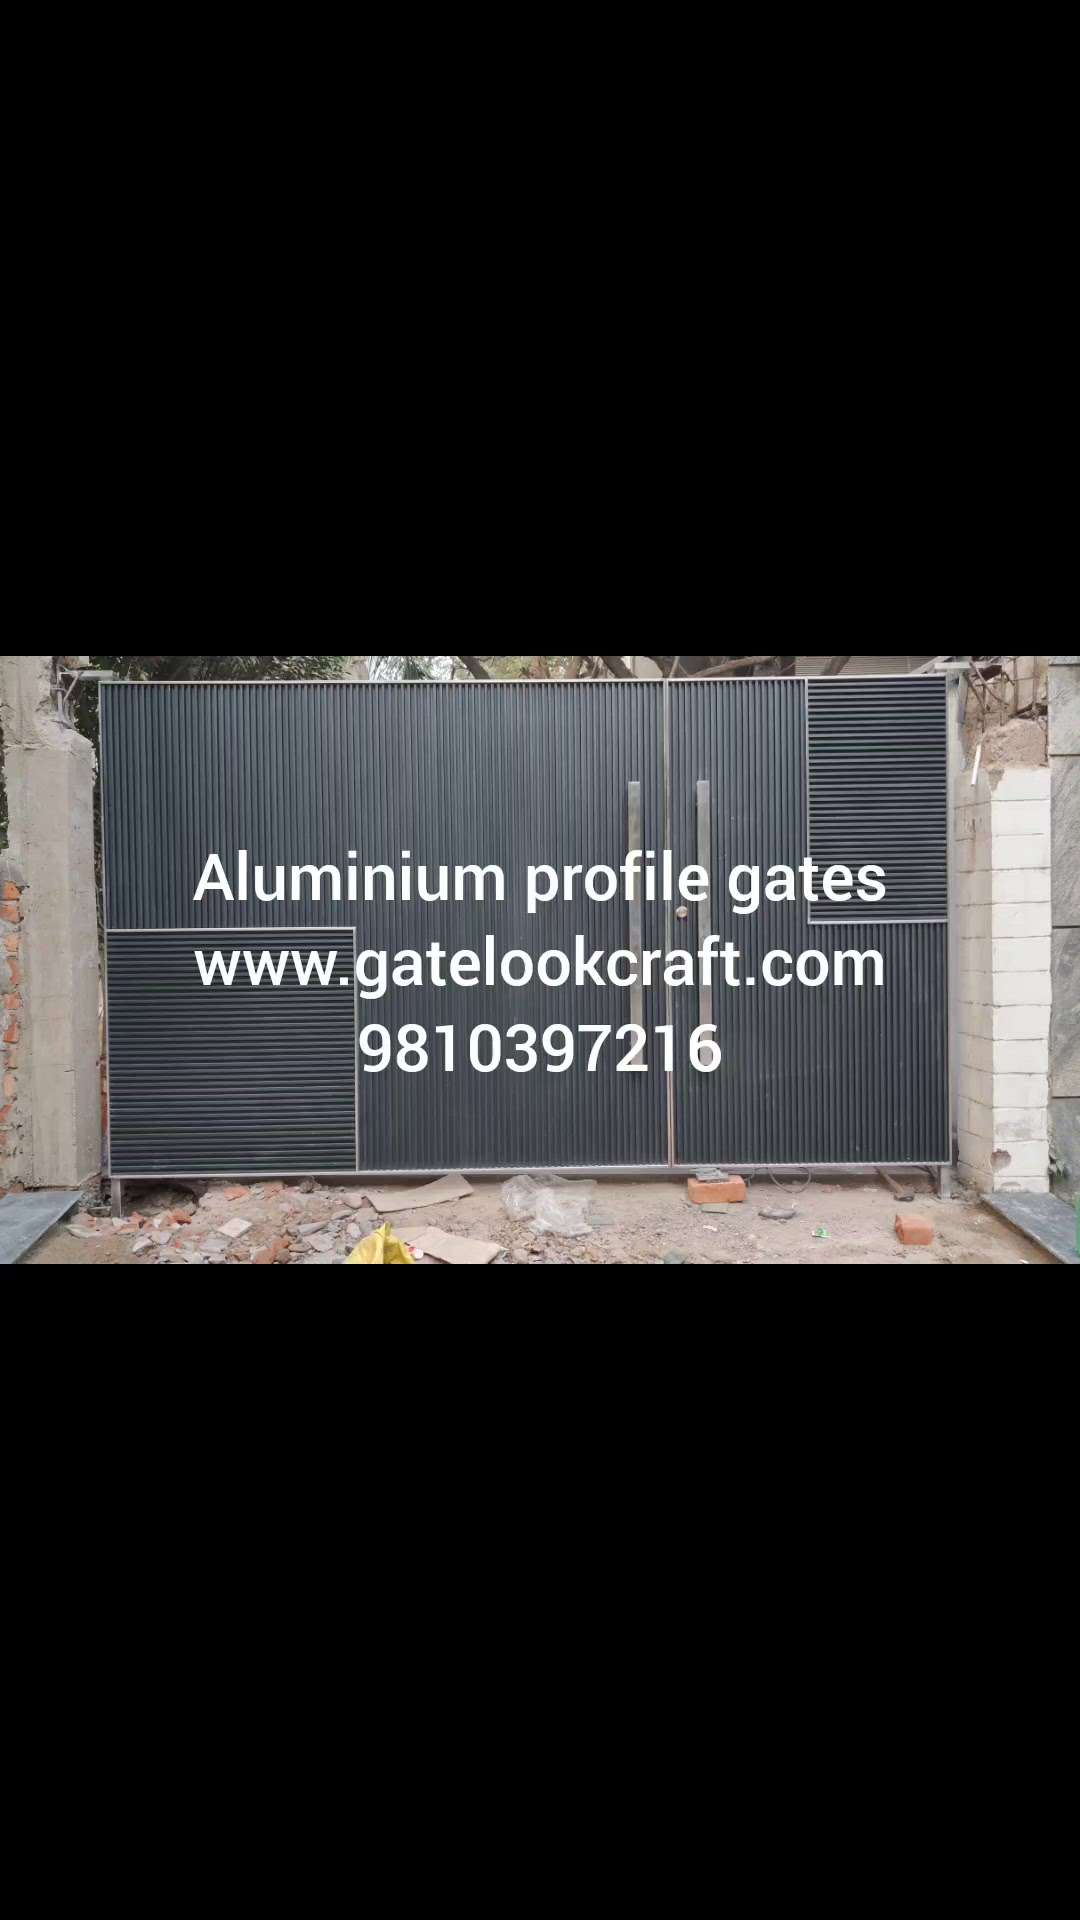 Aluminium profile gates by Hibza sterling interiors pvt ltd #gatelookcraft #aluminiumprofilegates #profilegate #maingates #aluminiumgates #modulergates #fancygates #gates